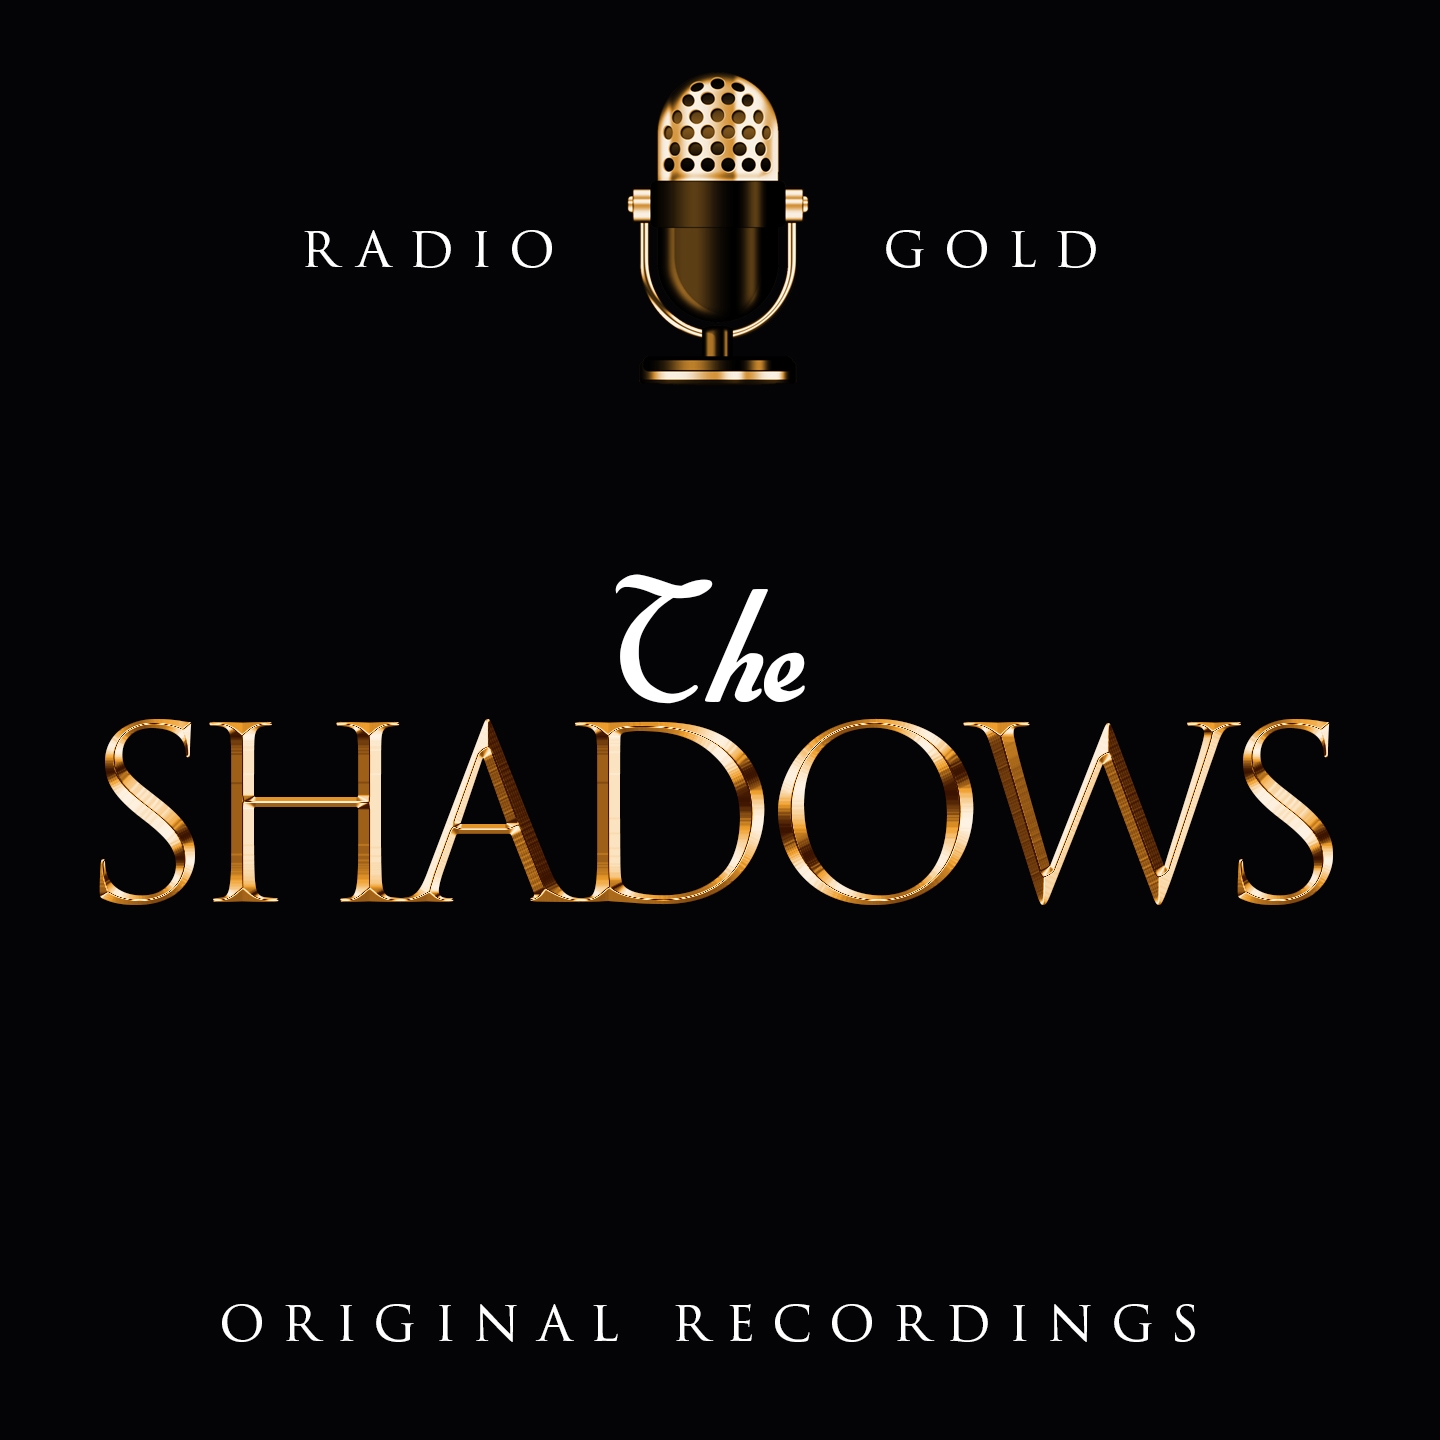 Radio Gold / The Shadows